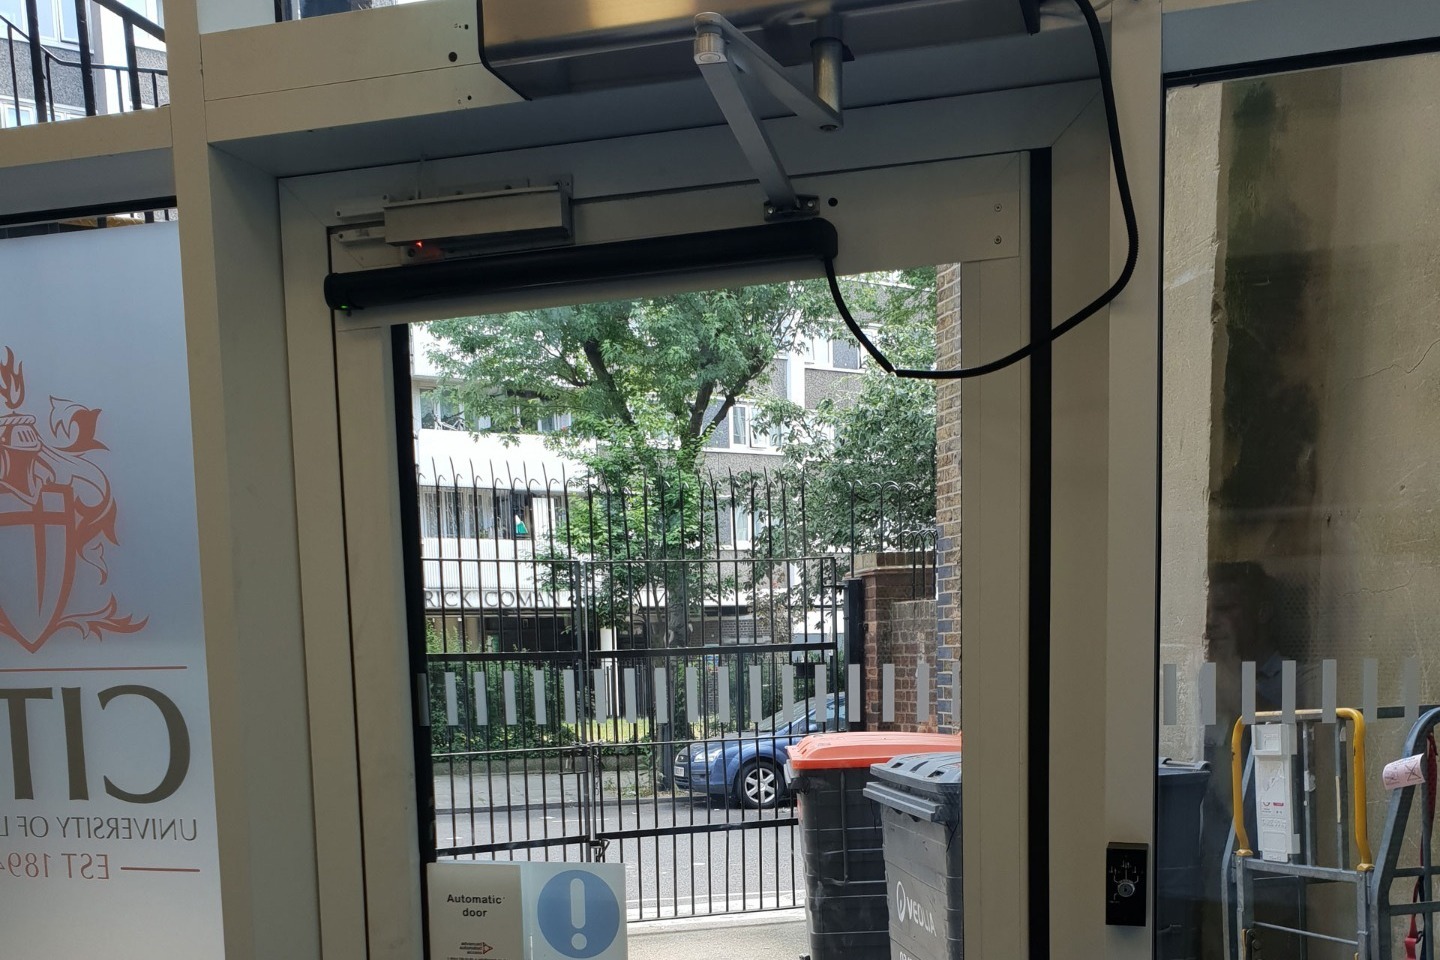 Automated external door